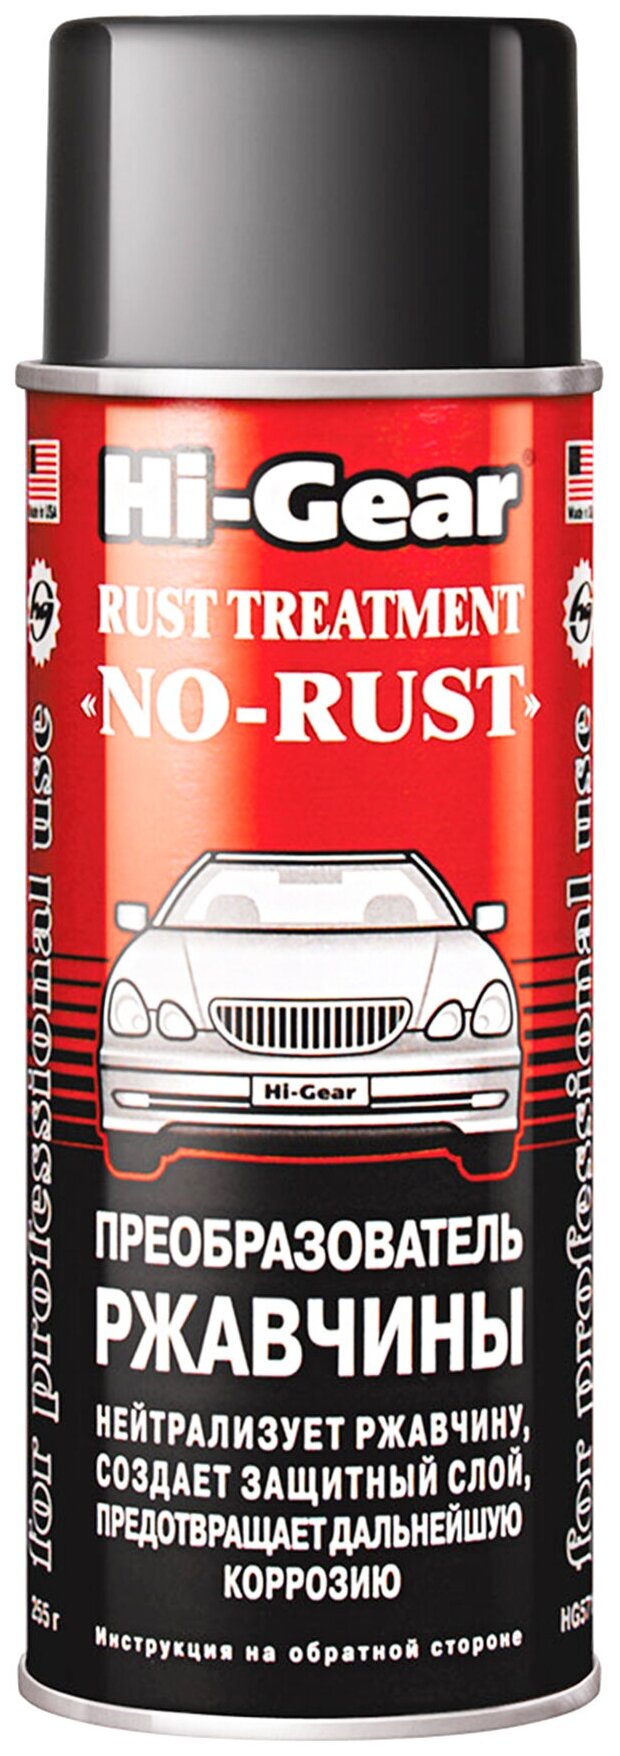 Rust treatment аэрозоль фото 15